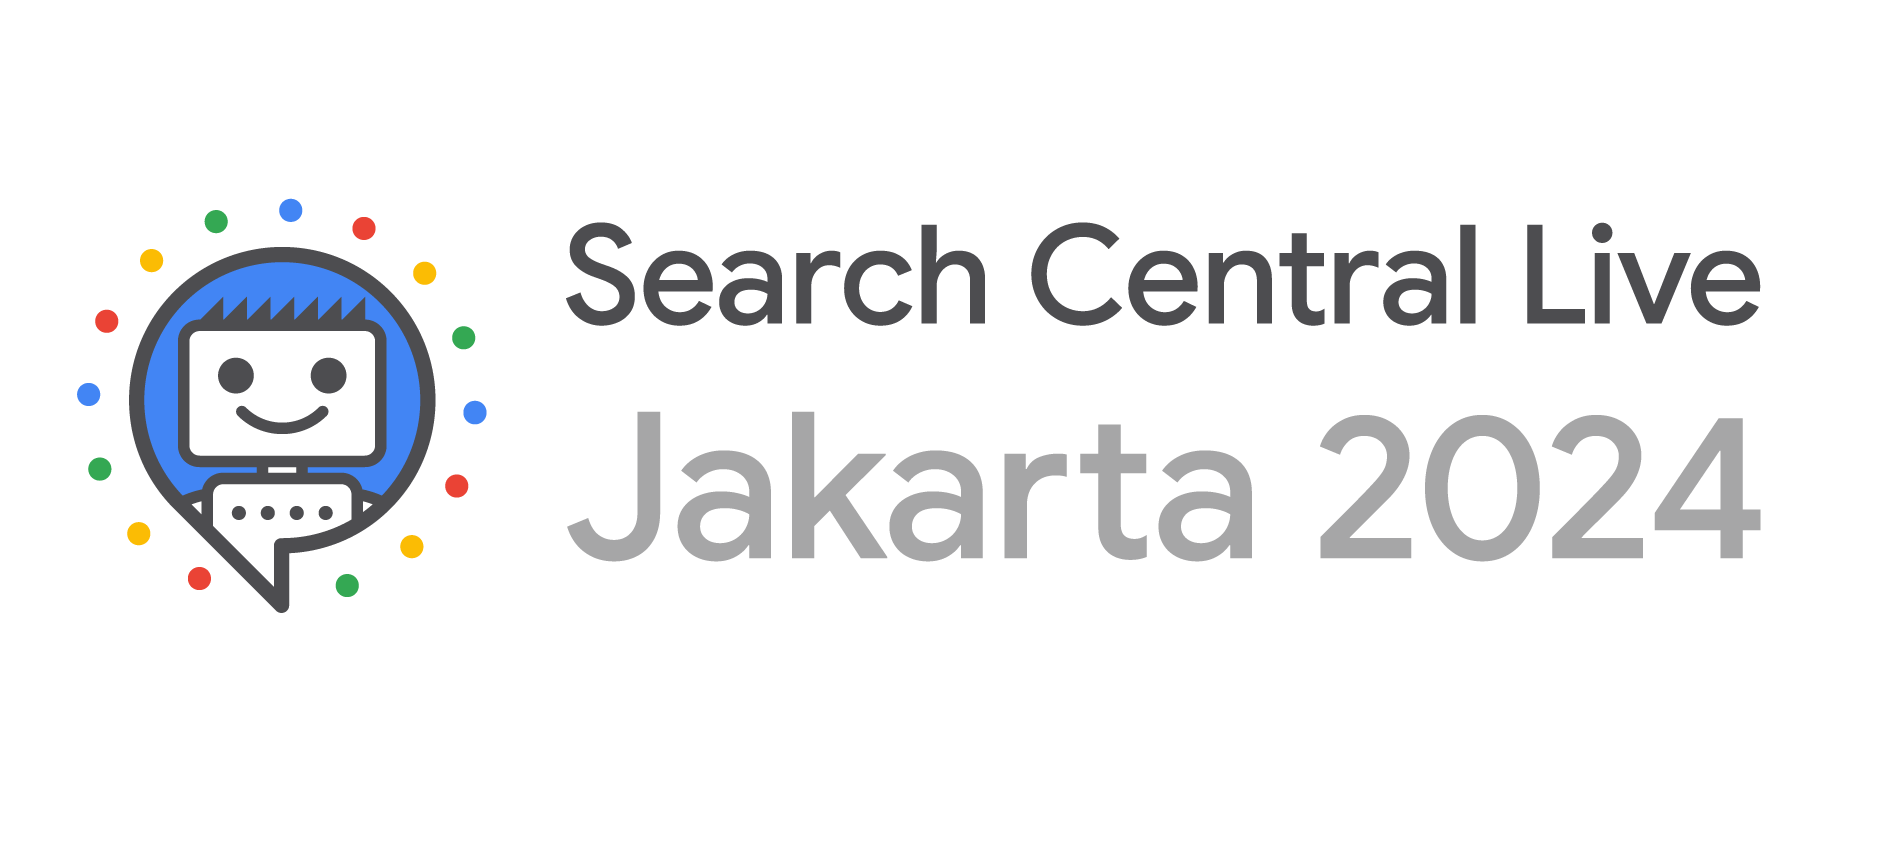 Search Central Live Джакарта 2024